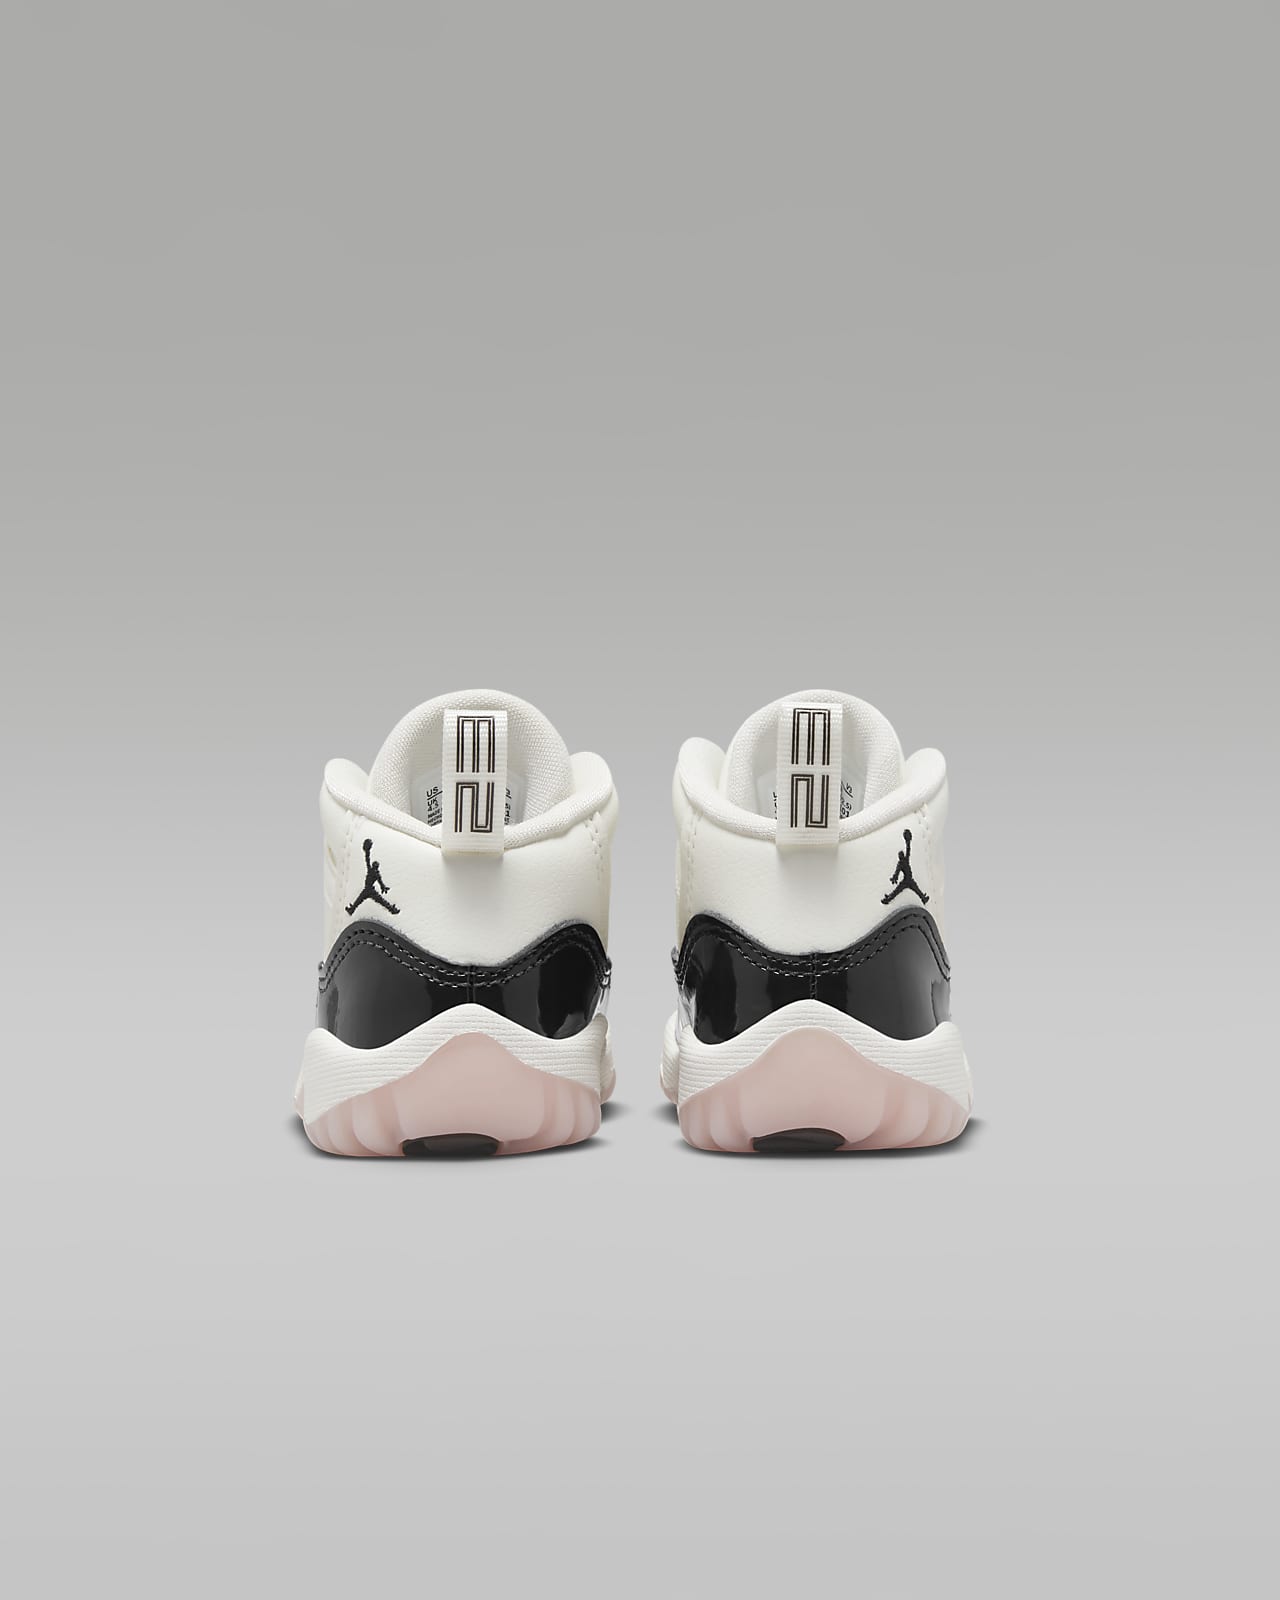 Louis Vuitton Retro Air Jordan 11 Shoes